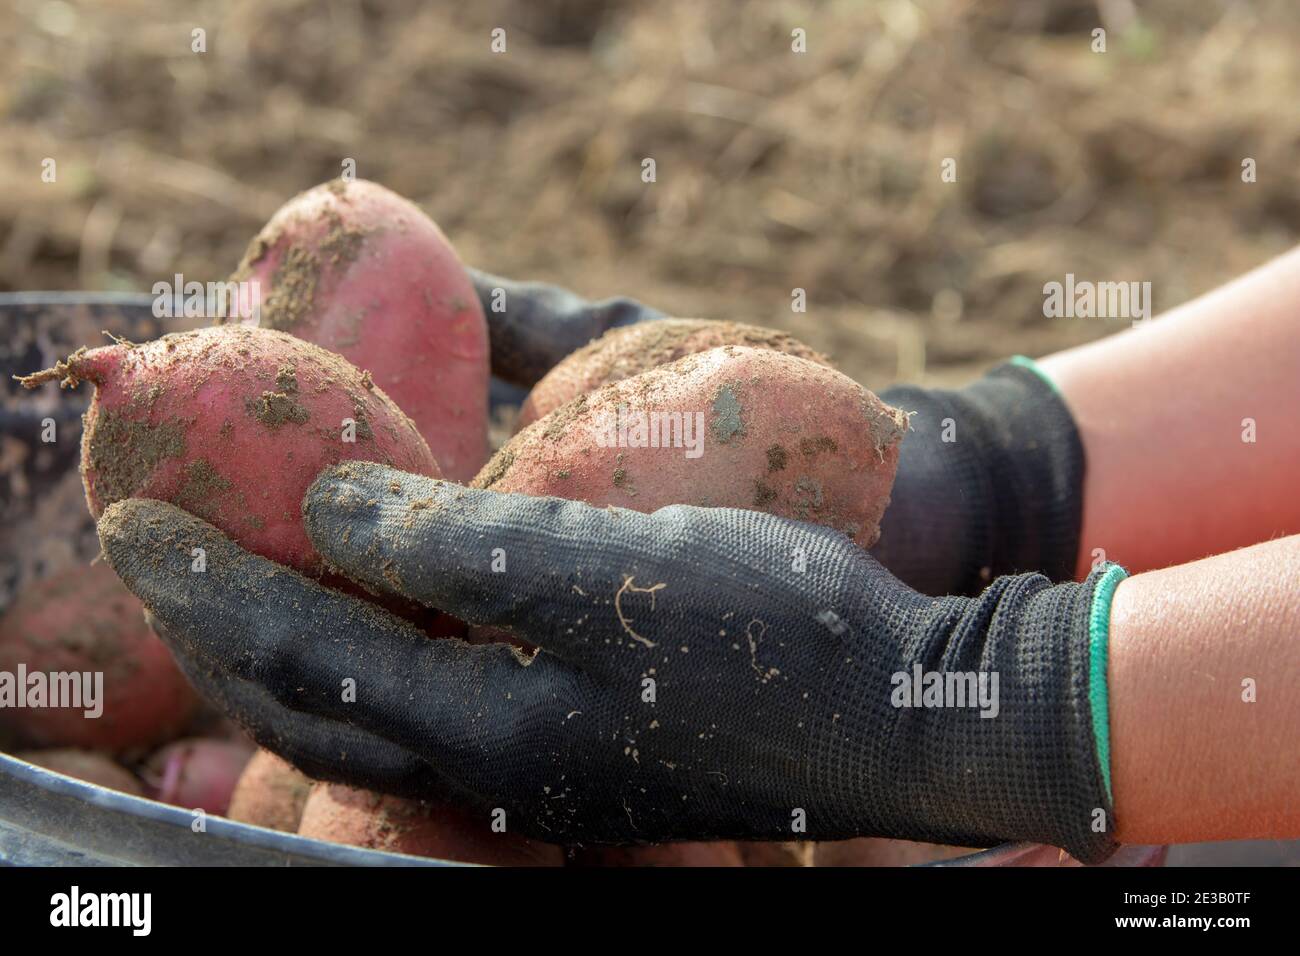 Fresh Organic Potatoes in the Field. Farmer Harvesting Potatoes. Potato farming. Stock Photo